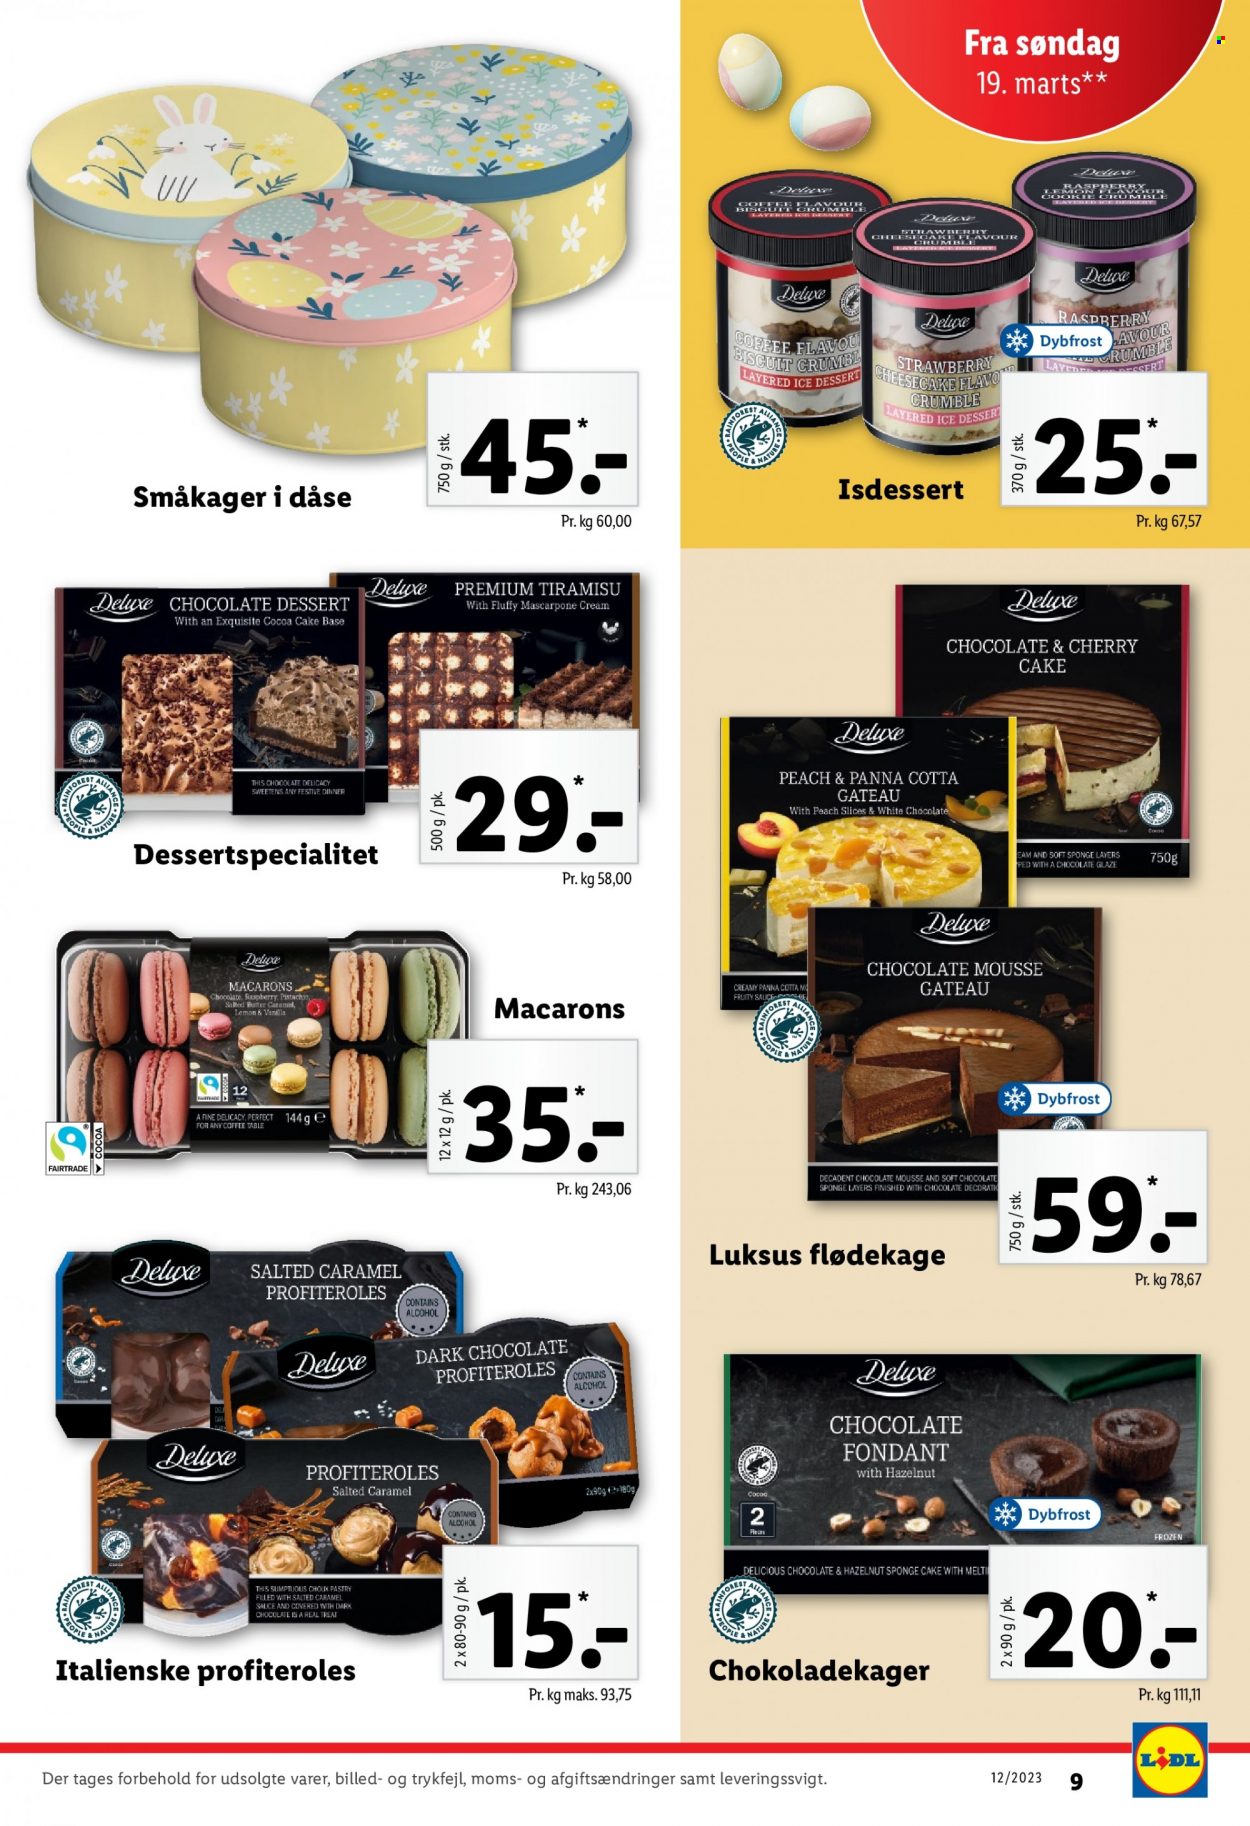 thumbnail - Lidl tilbud  - 19.3.2023 - 25.3.2023 - tilbudsprodukter - cheesecake, macarons, mascarpone, tiramisu, profiteroles, småkager, vanilje, sauce, Lange. Side 9.